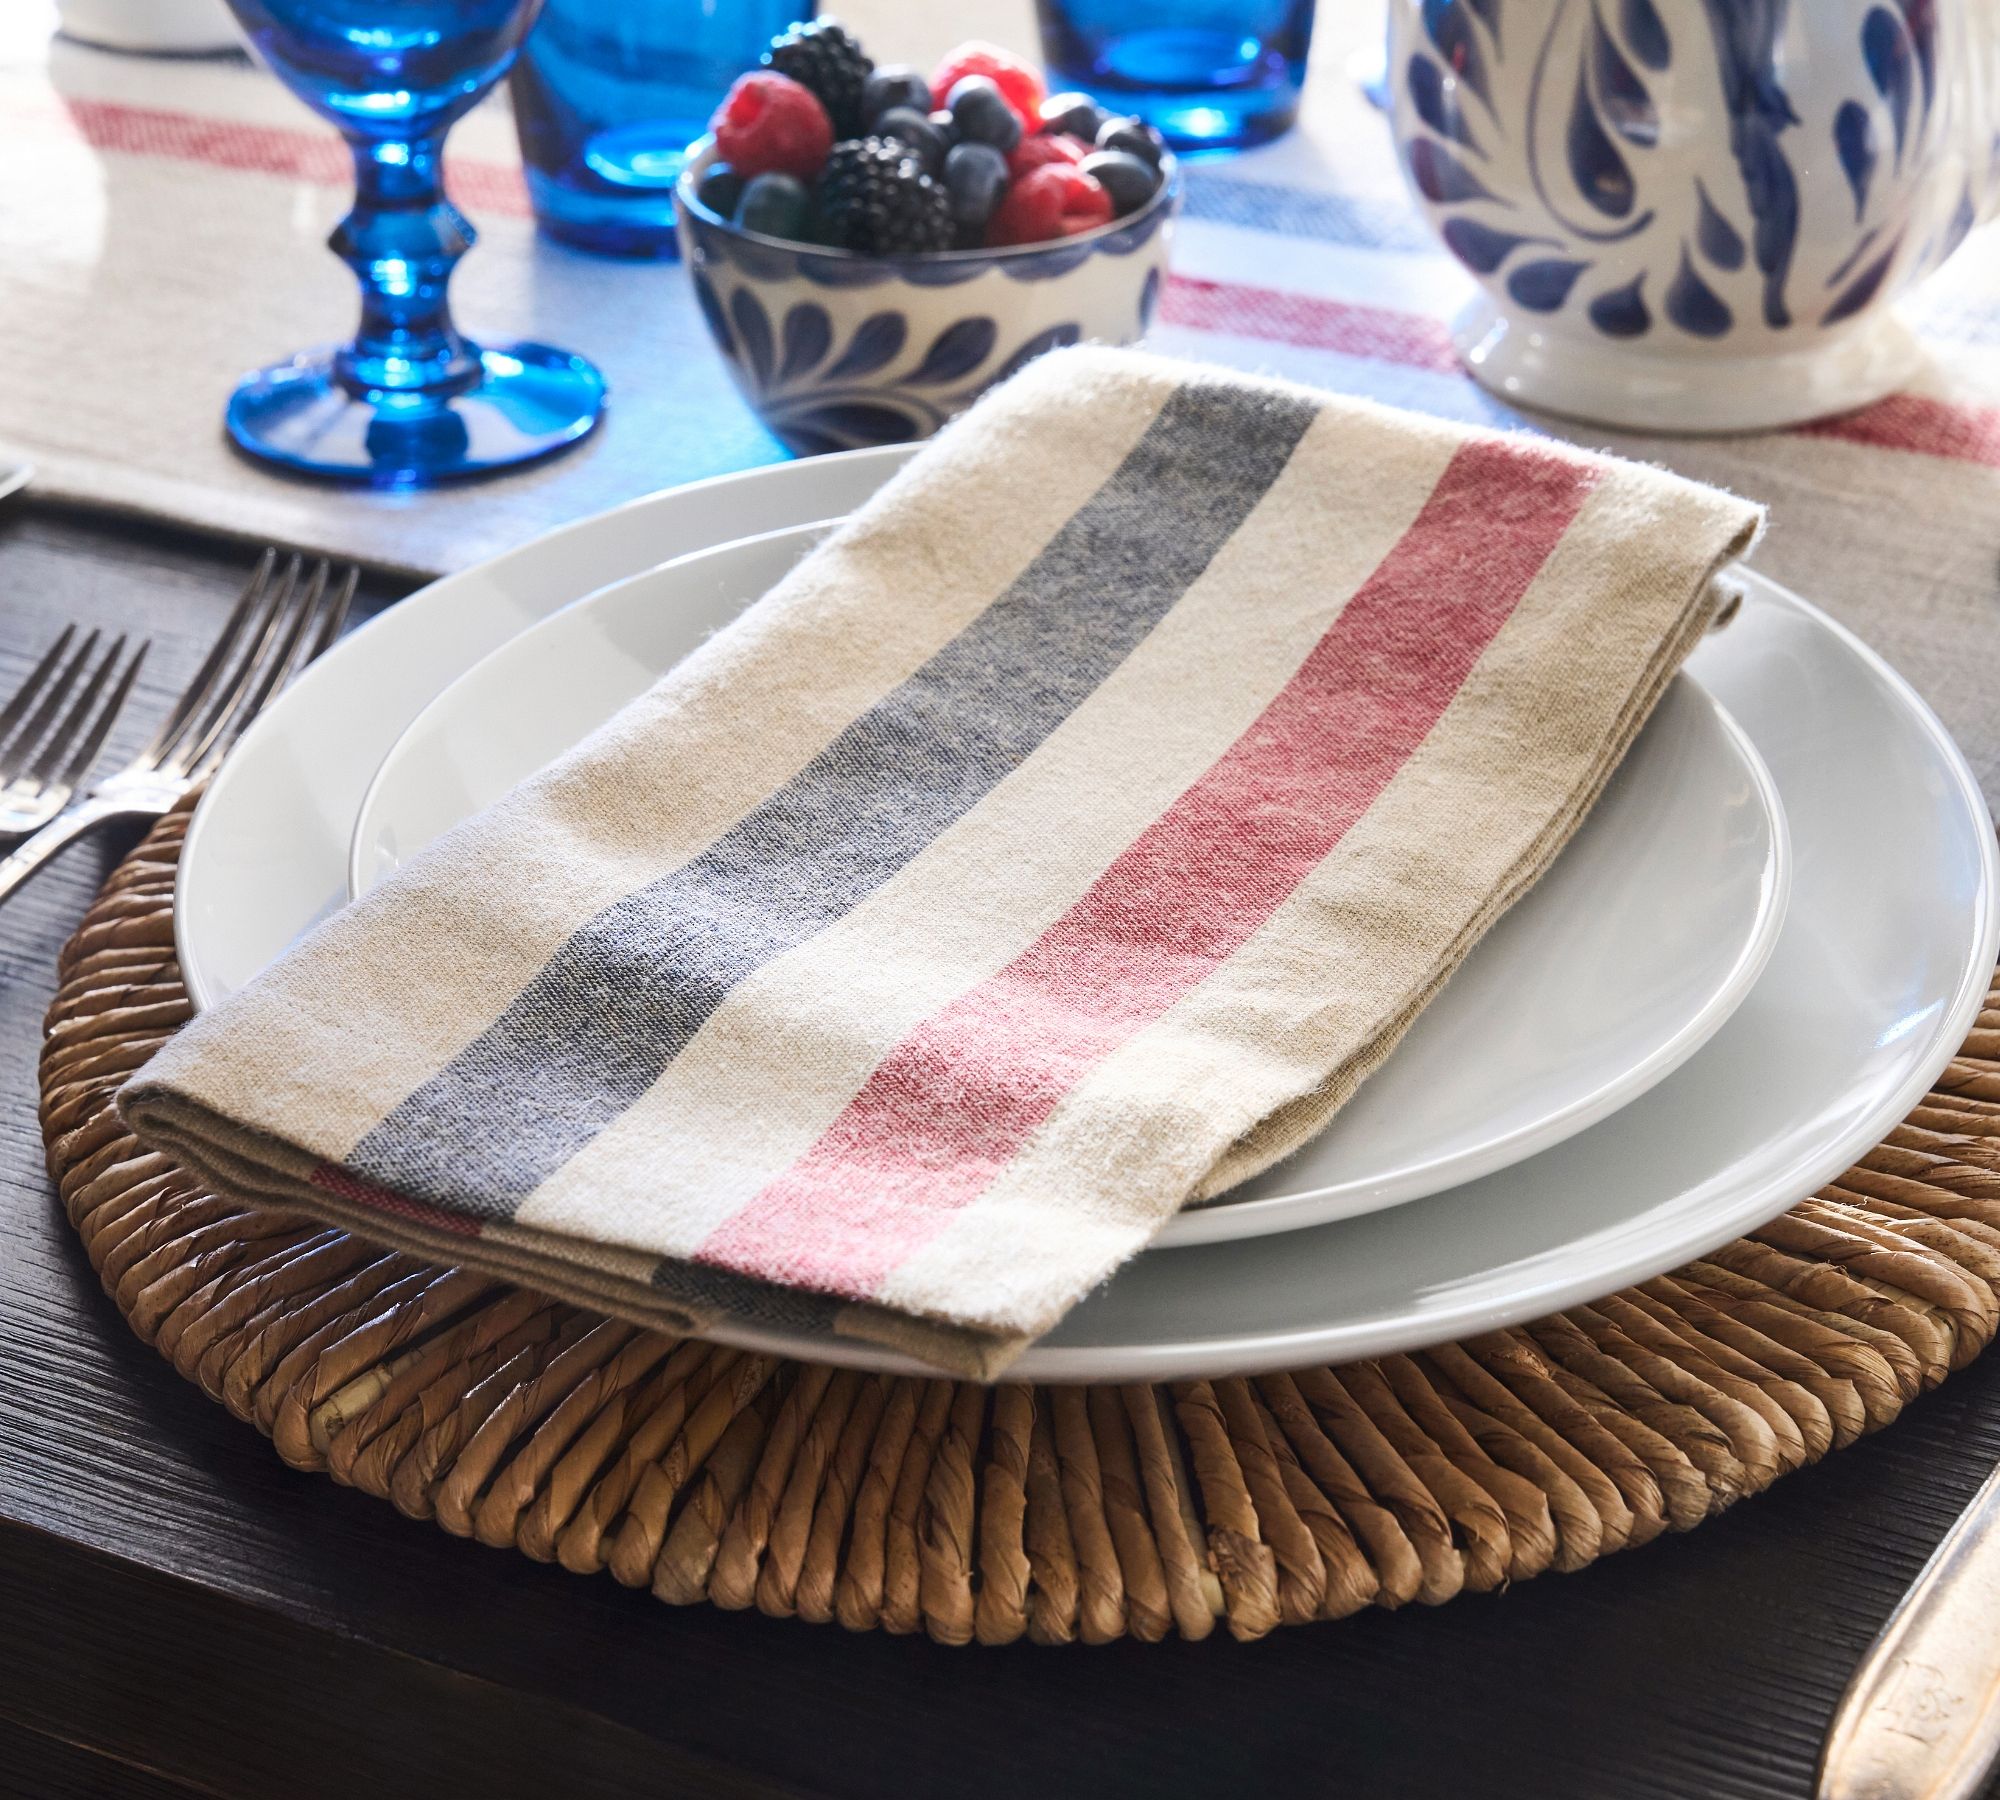 Patriotic Stripe Cotton Napkins - Set of 4